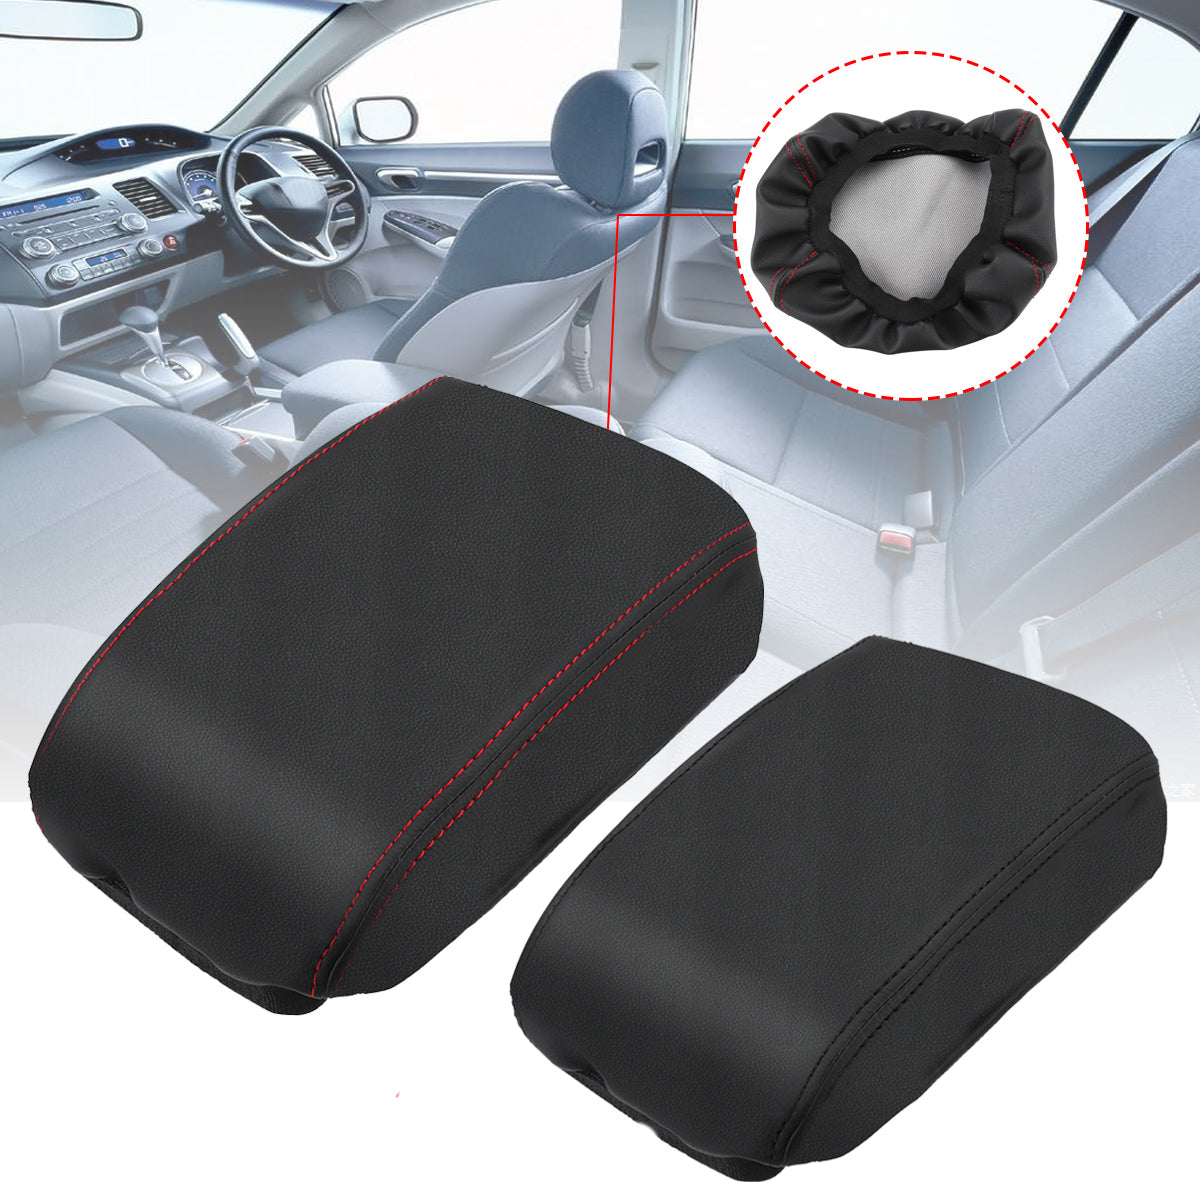 PU Leather Car Center Armrest Console Box Cover Protection For Honda Civic 2006-2011 - Auto GoShop